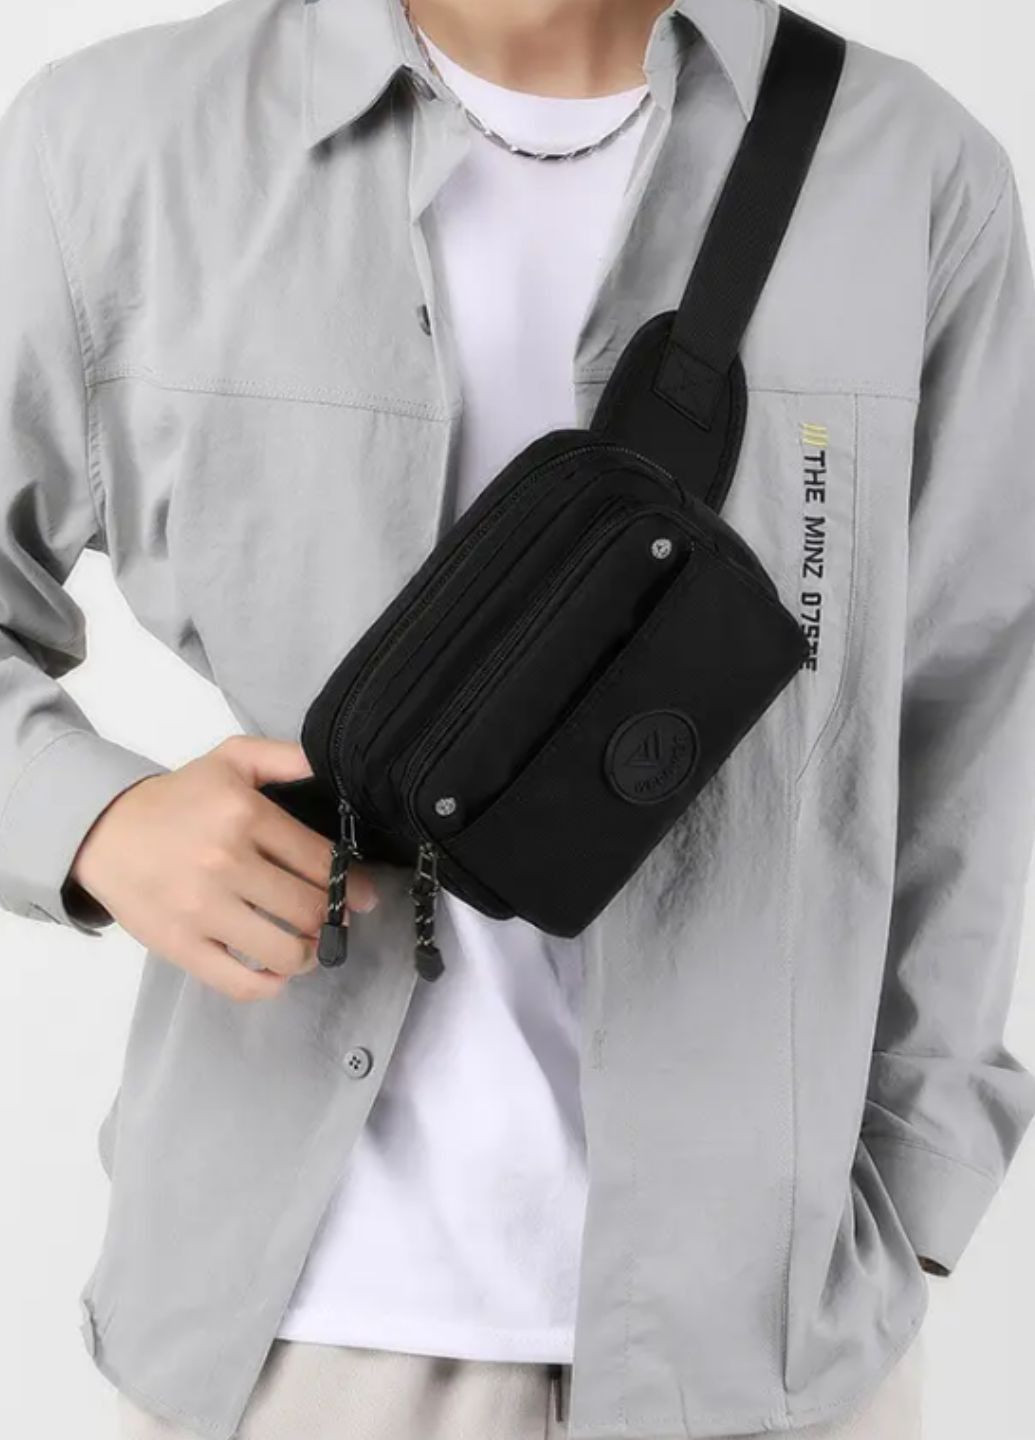 Компактна чоловіча багатофункціональна сумка Black Comfort No Brand (283608404)